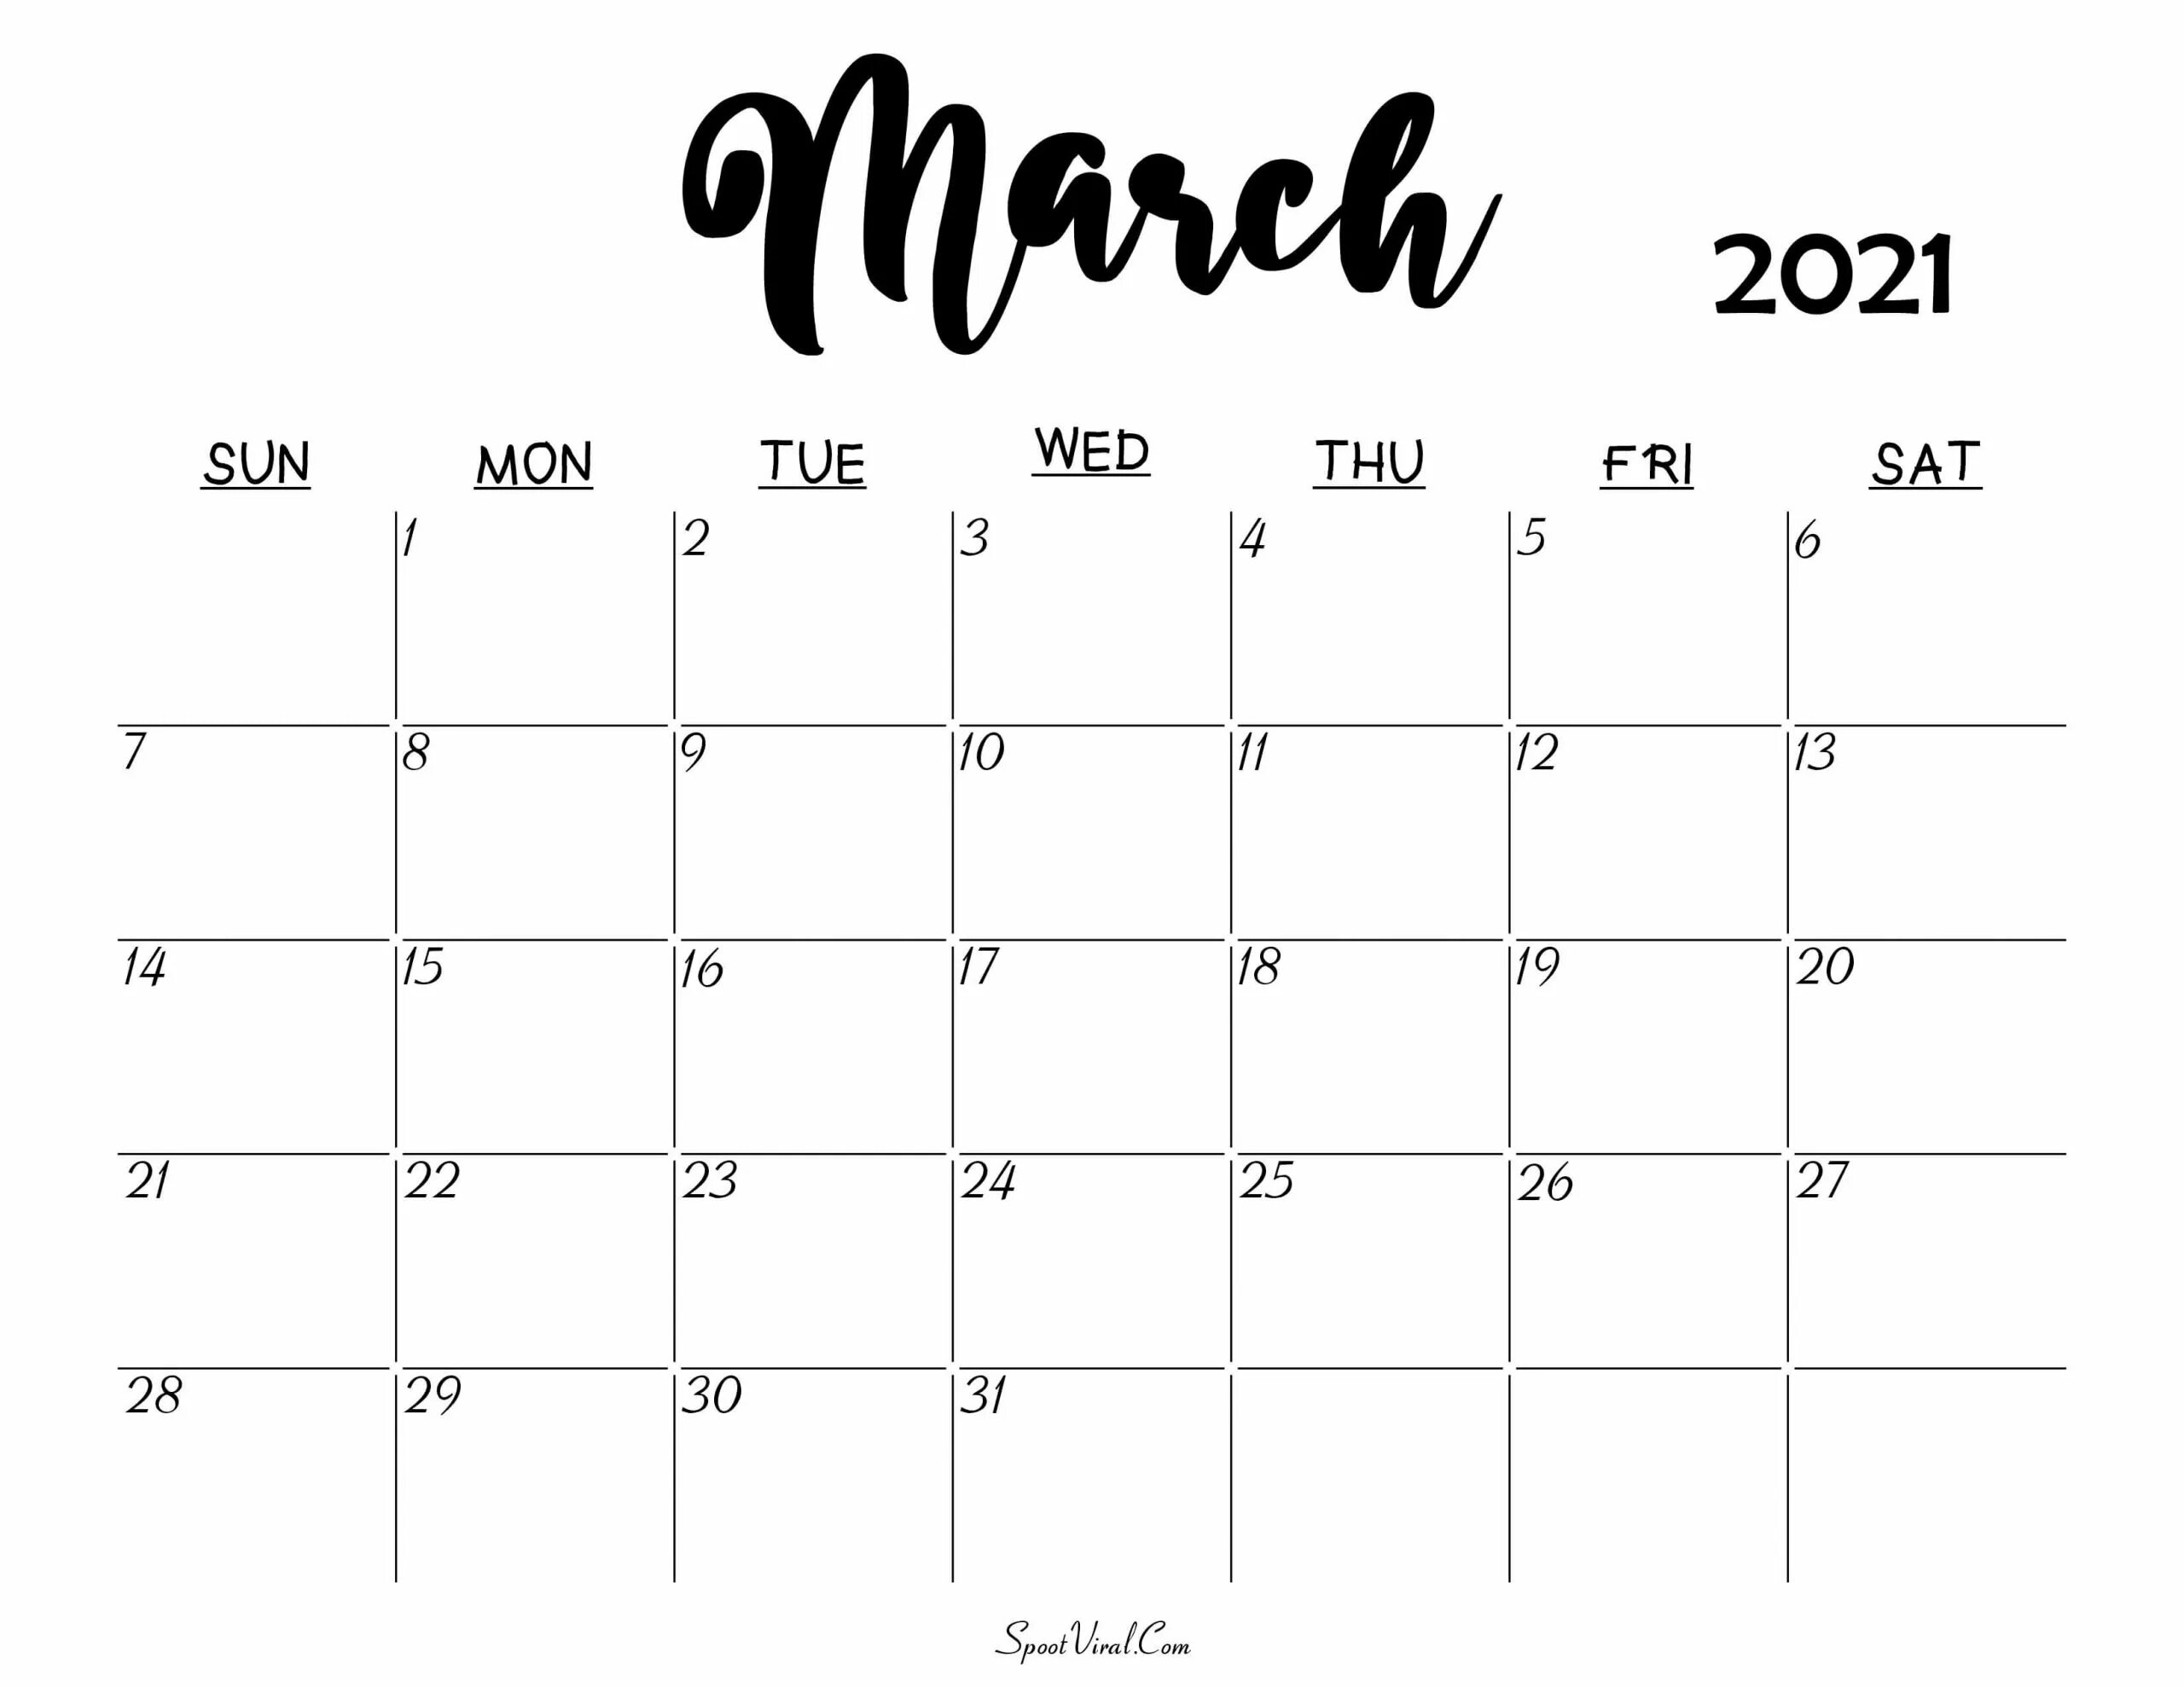 Март 2021 календарь. Планер на месяц март. Органайзер на март 2021. Планер март 2021.